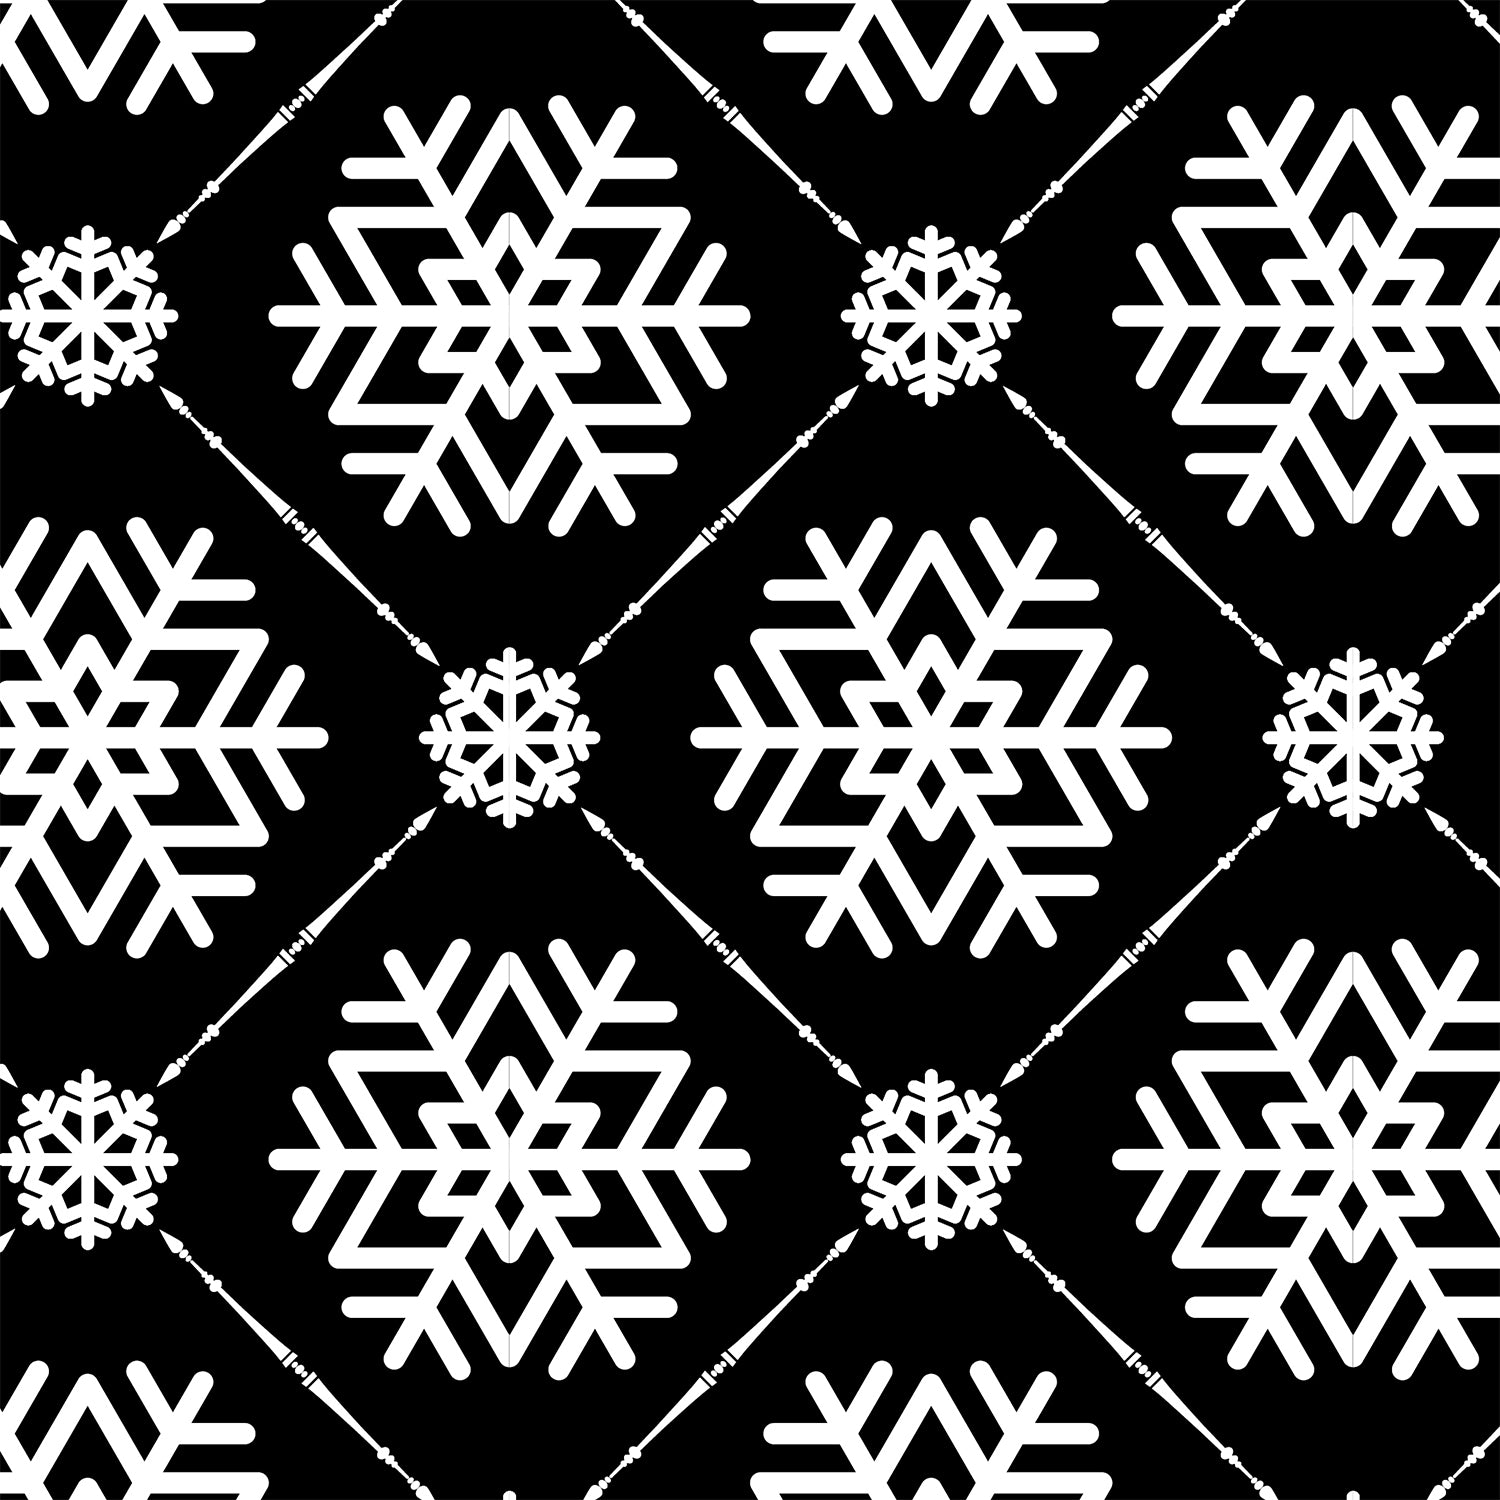 Black and White Snowflake Flat Wrapping Paper Sheet Wholesale Wraphaholic